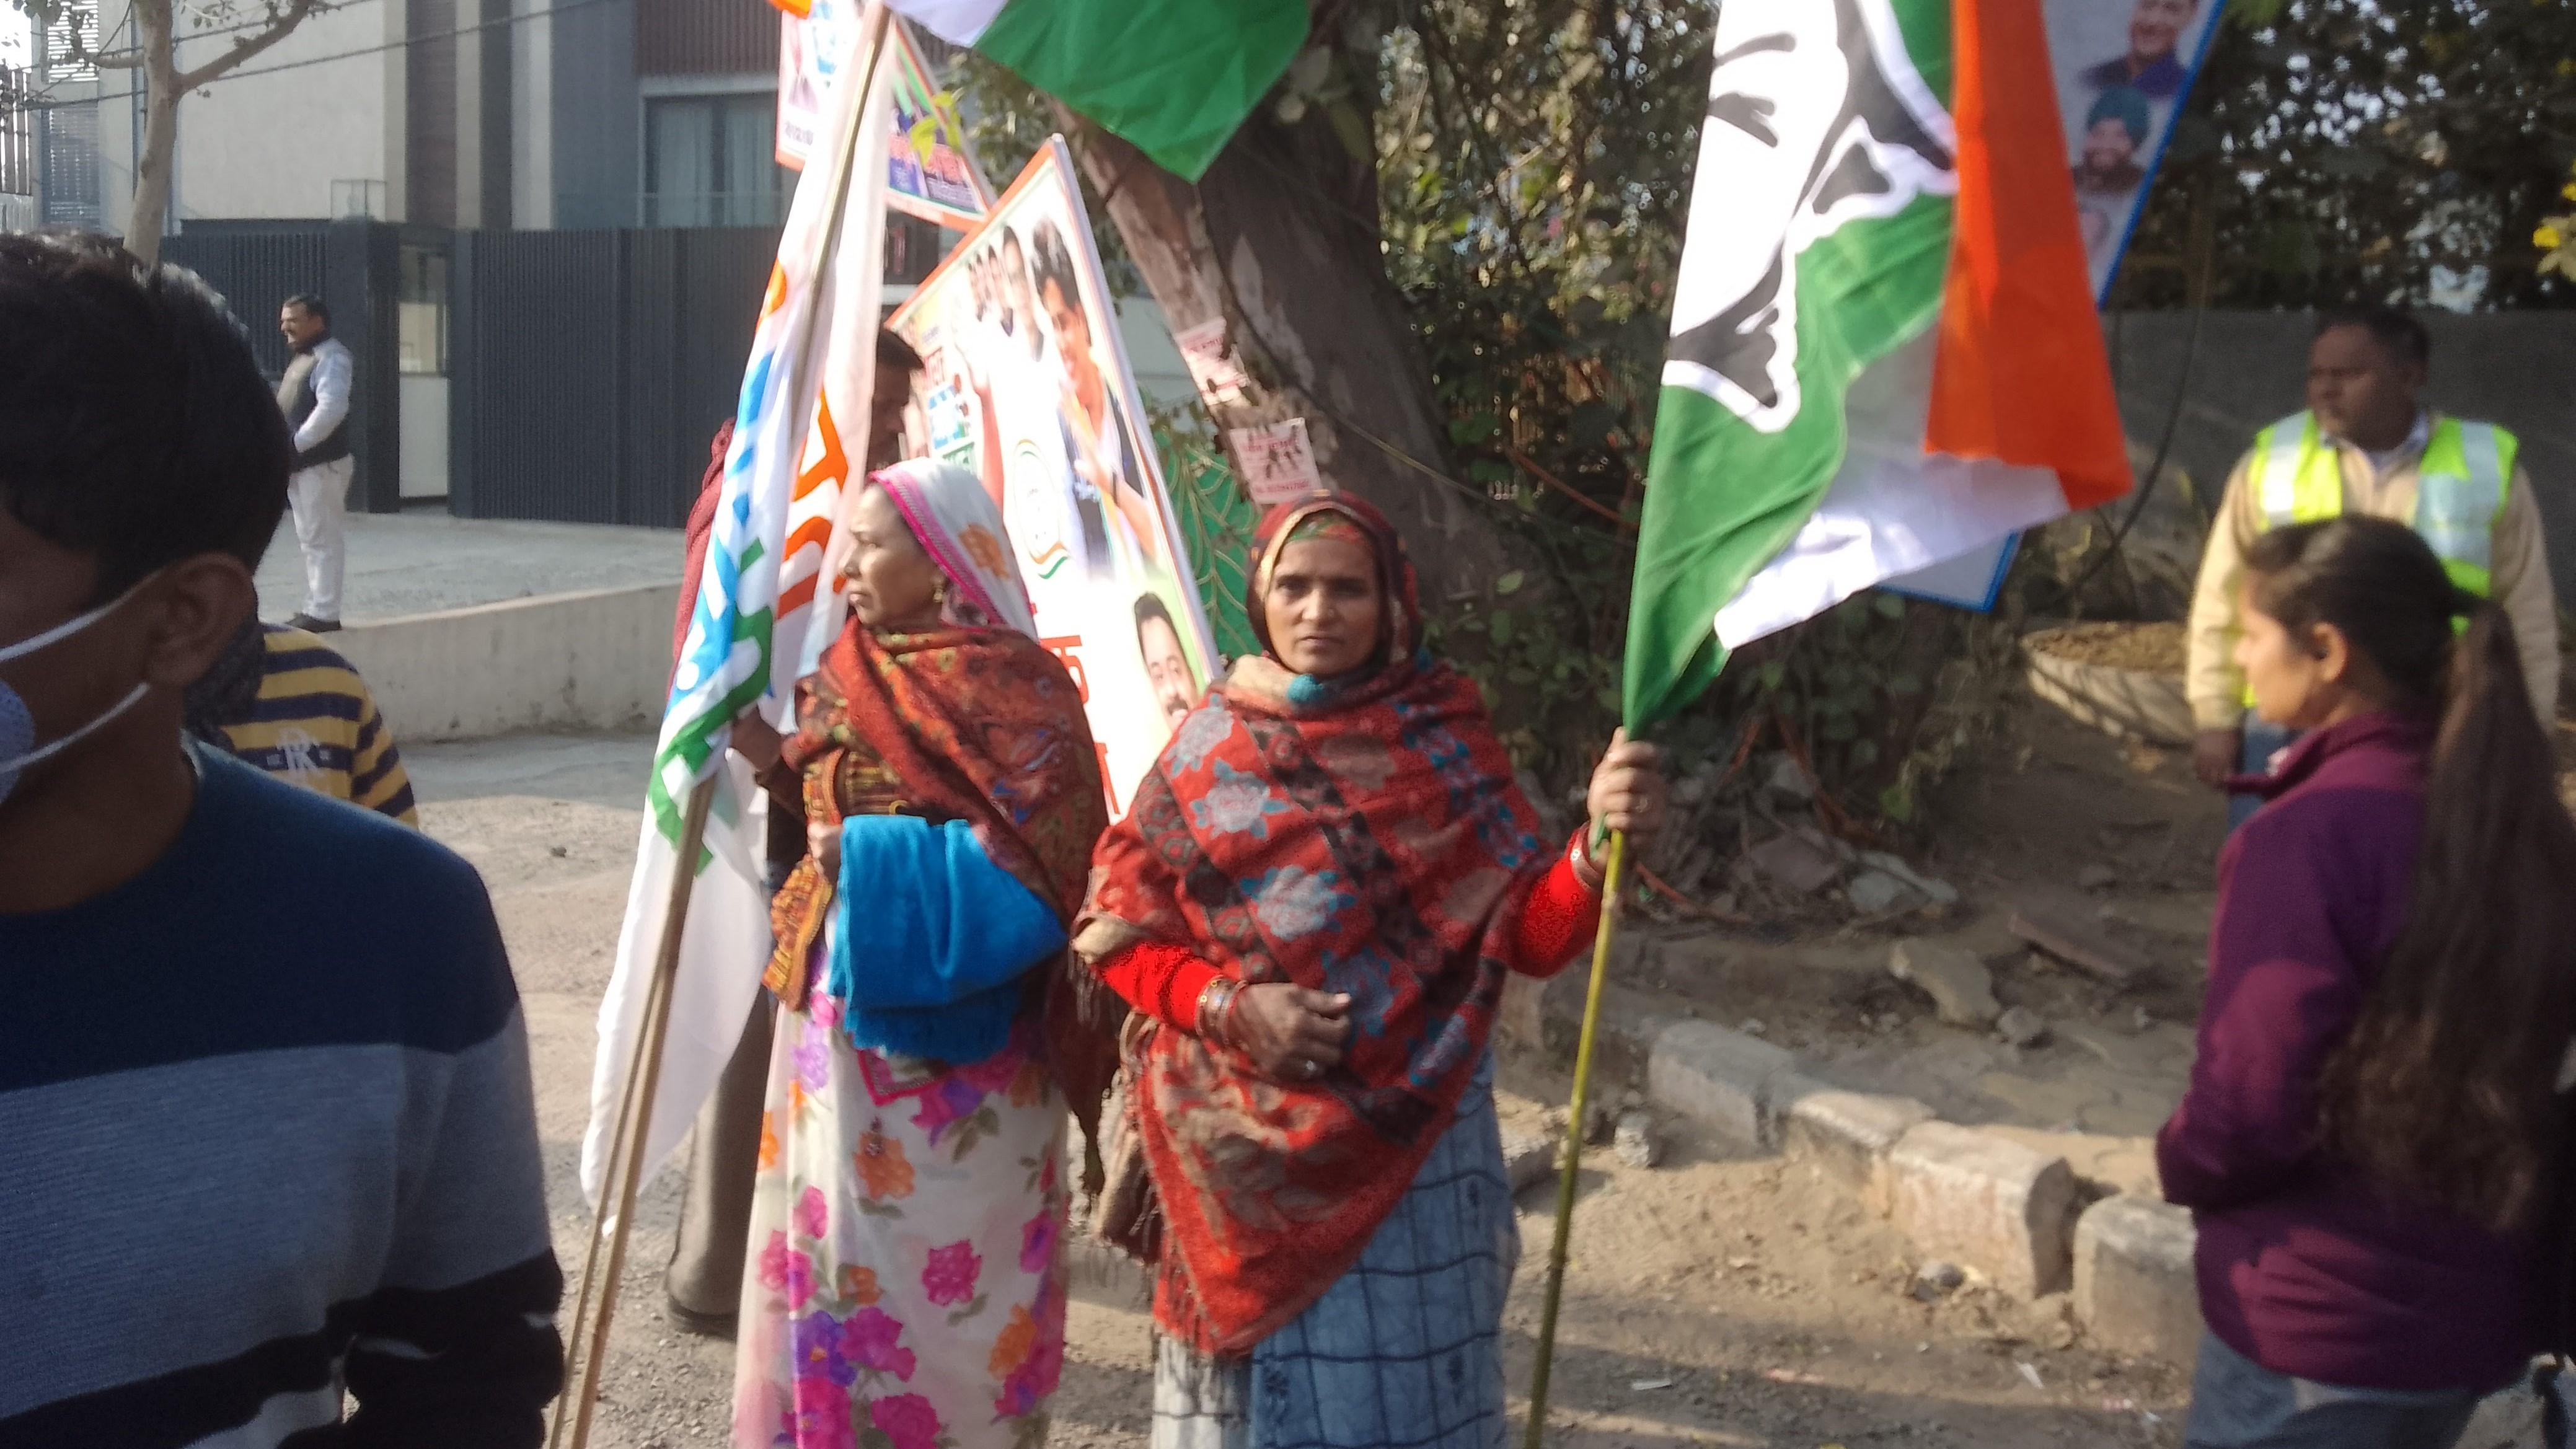 Women attend the Bharat Jodo Yatra march (image: Faizan Ahmed)